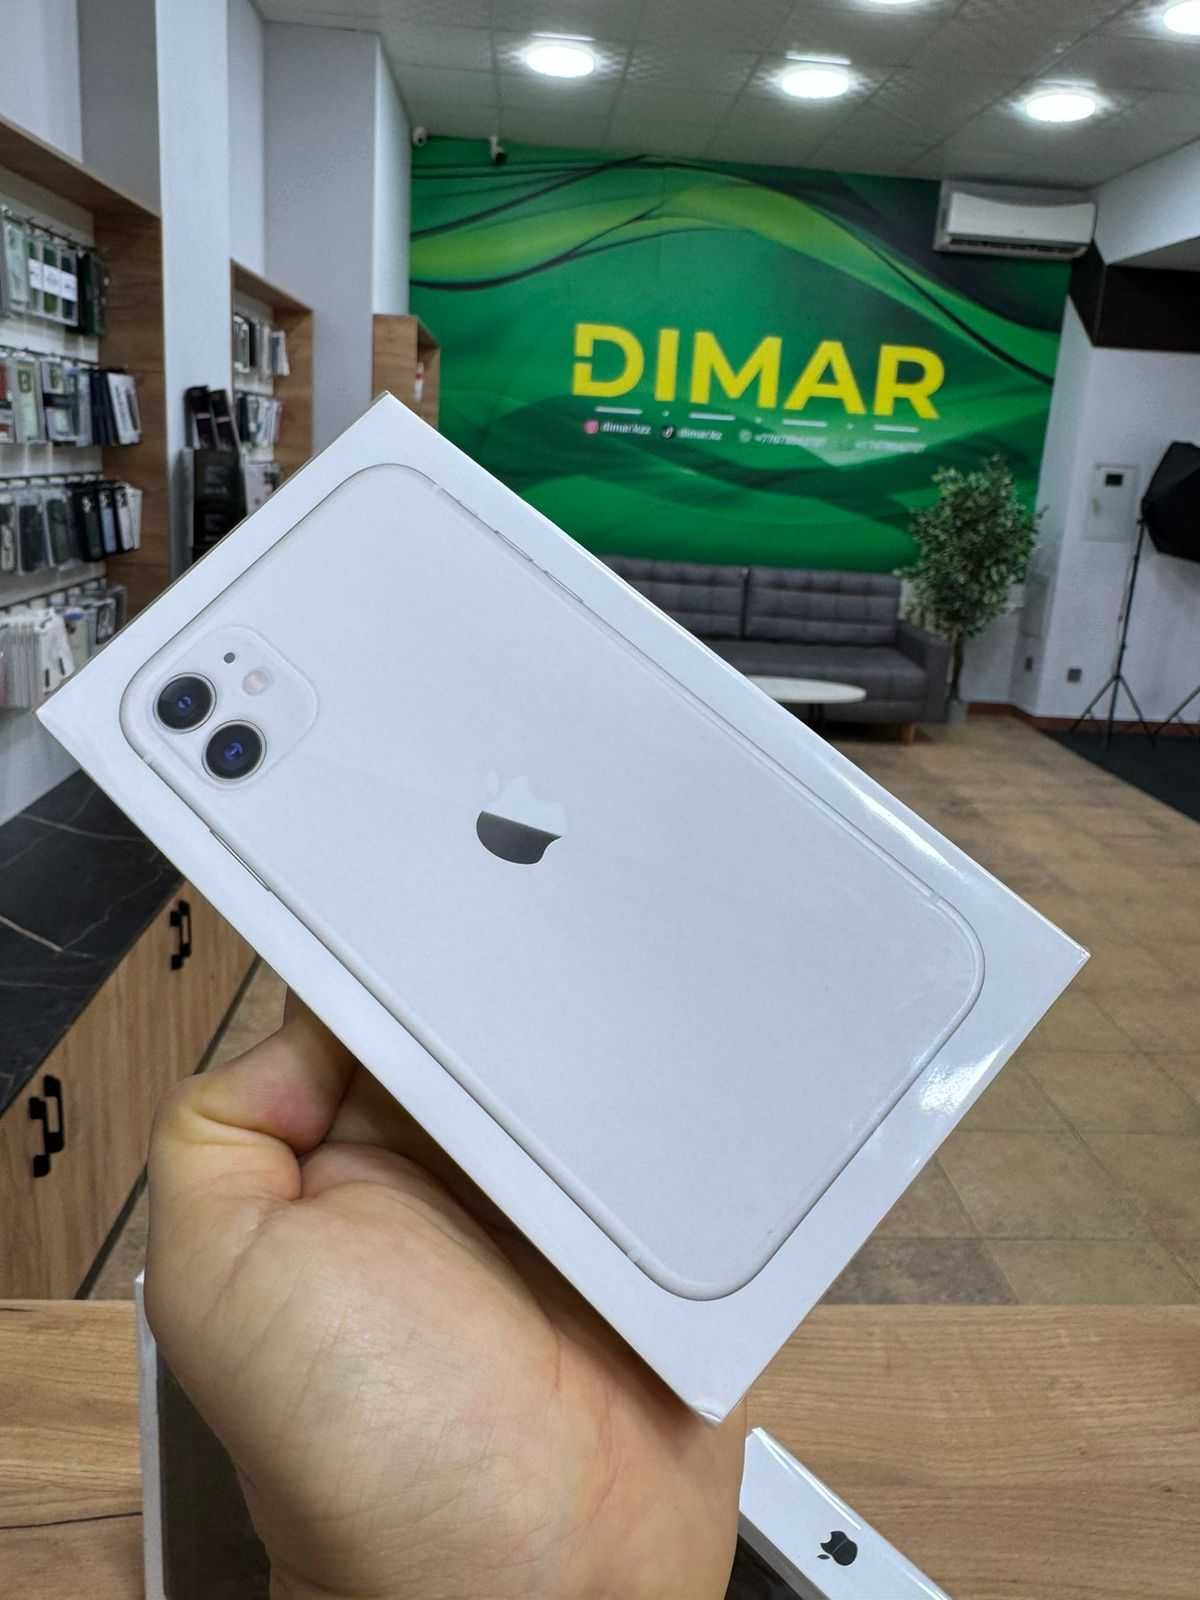 Iphone 11 128Gb Dual Sim White низкая цена в алматы на айфон 11 128гб